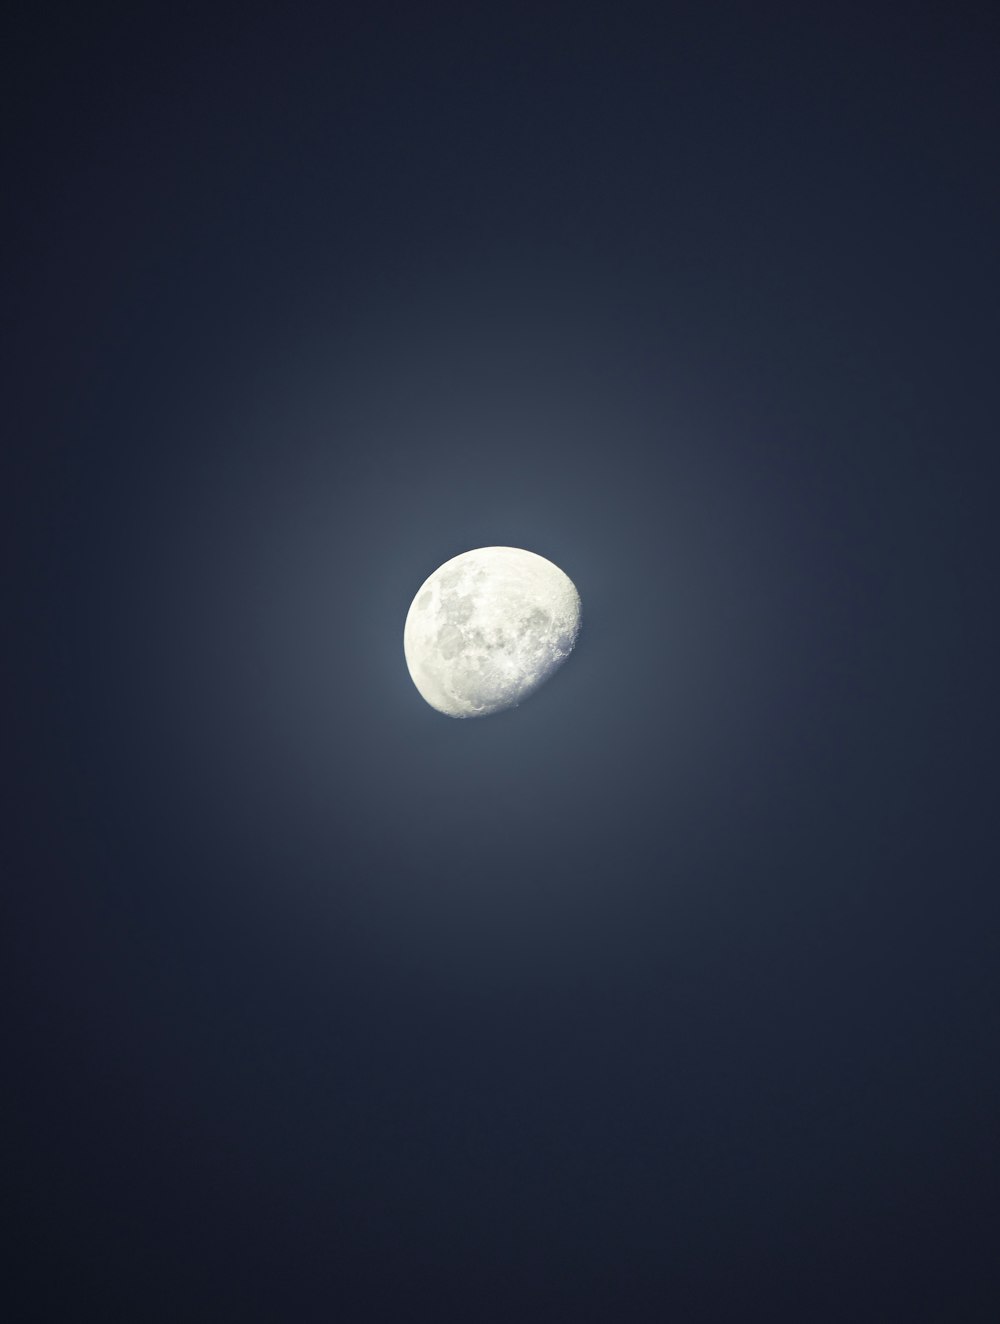 Full moon in dark night sky photo – Free Nature Image on Unsplash